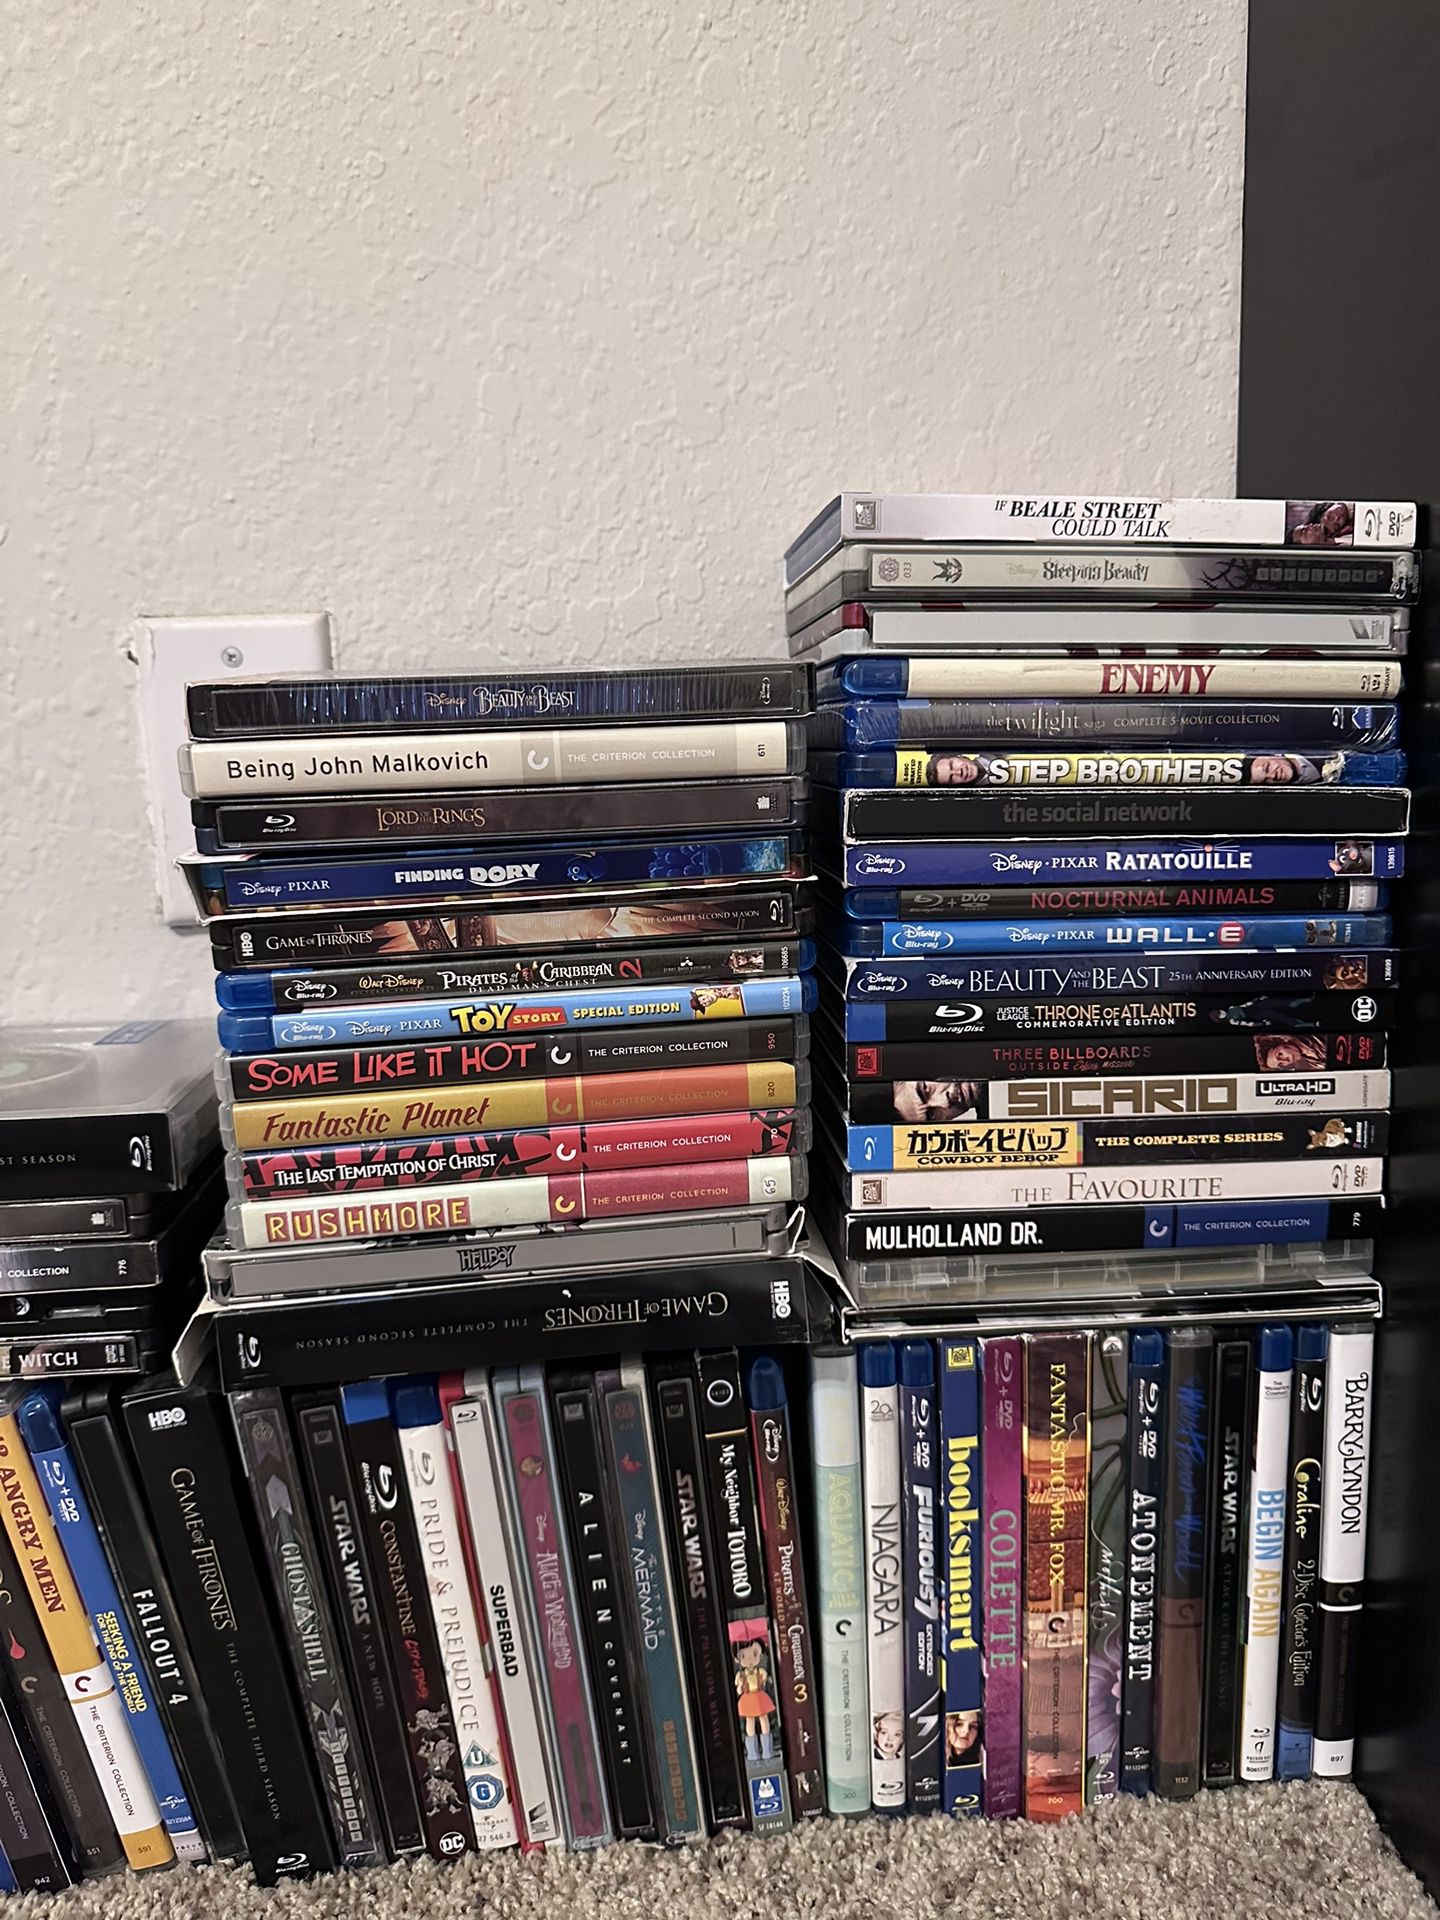 4K Blu-ray’s, Steelbooks, Blu-ray’s. Criterion Collection